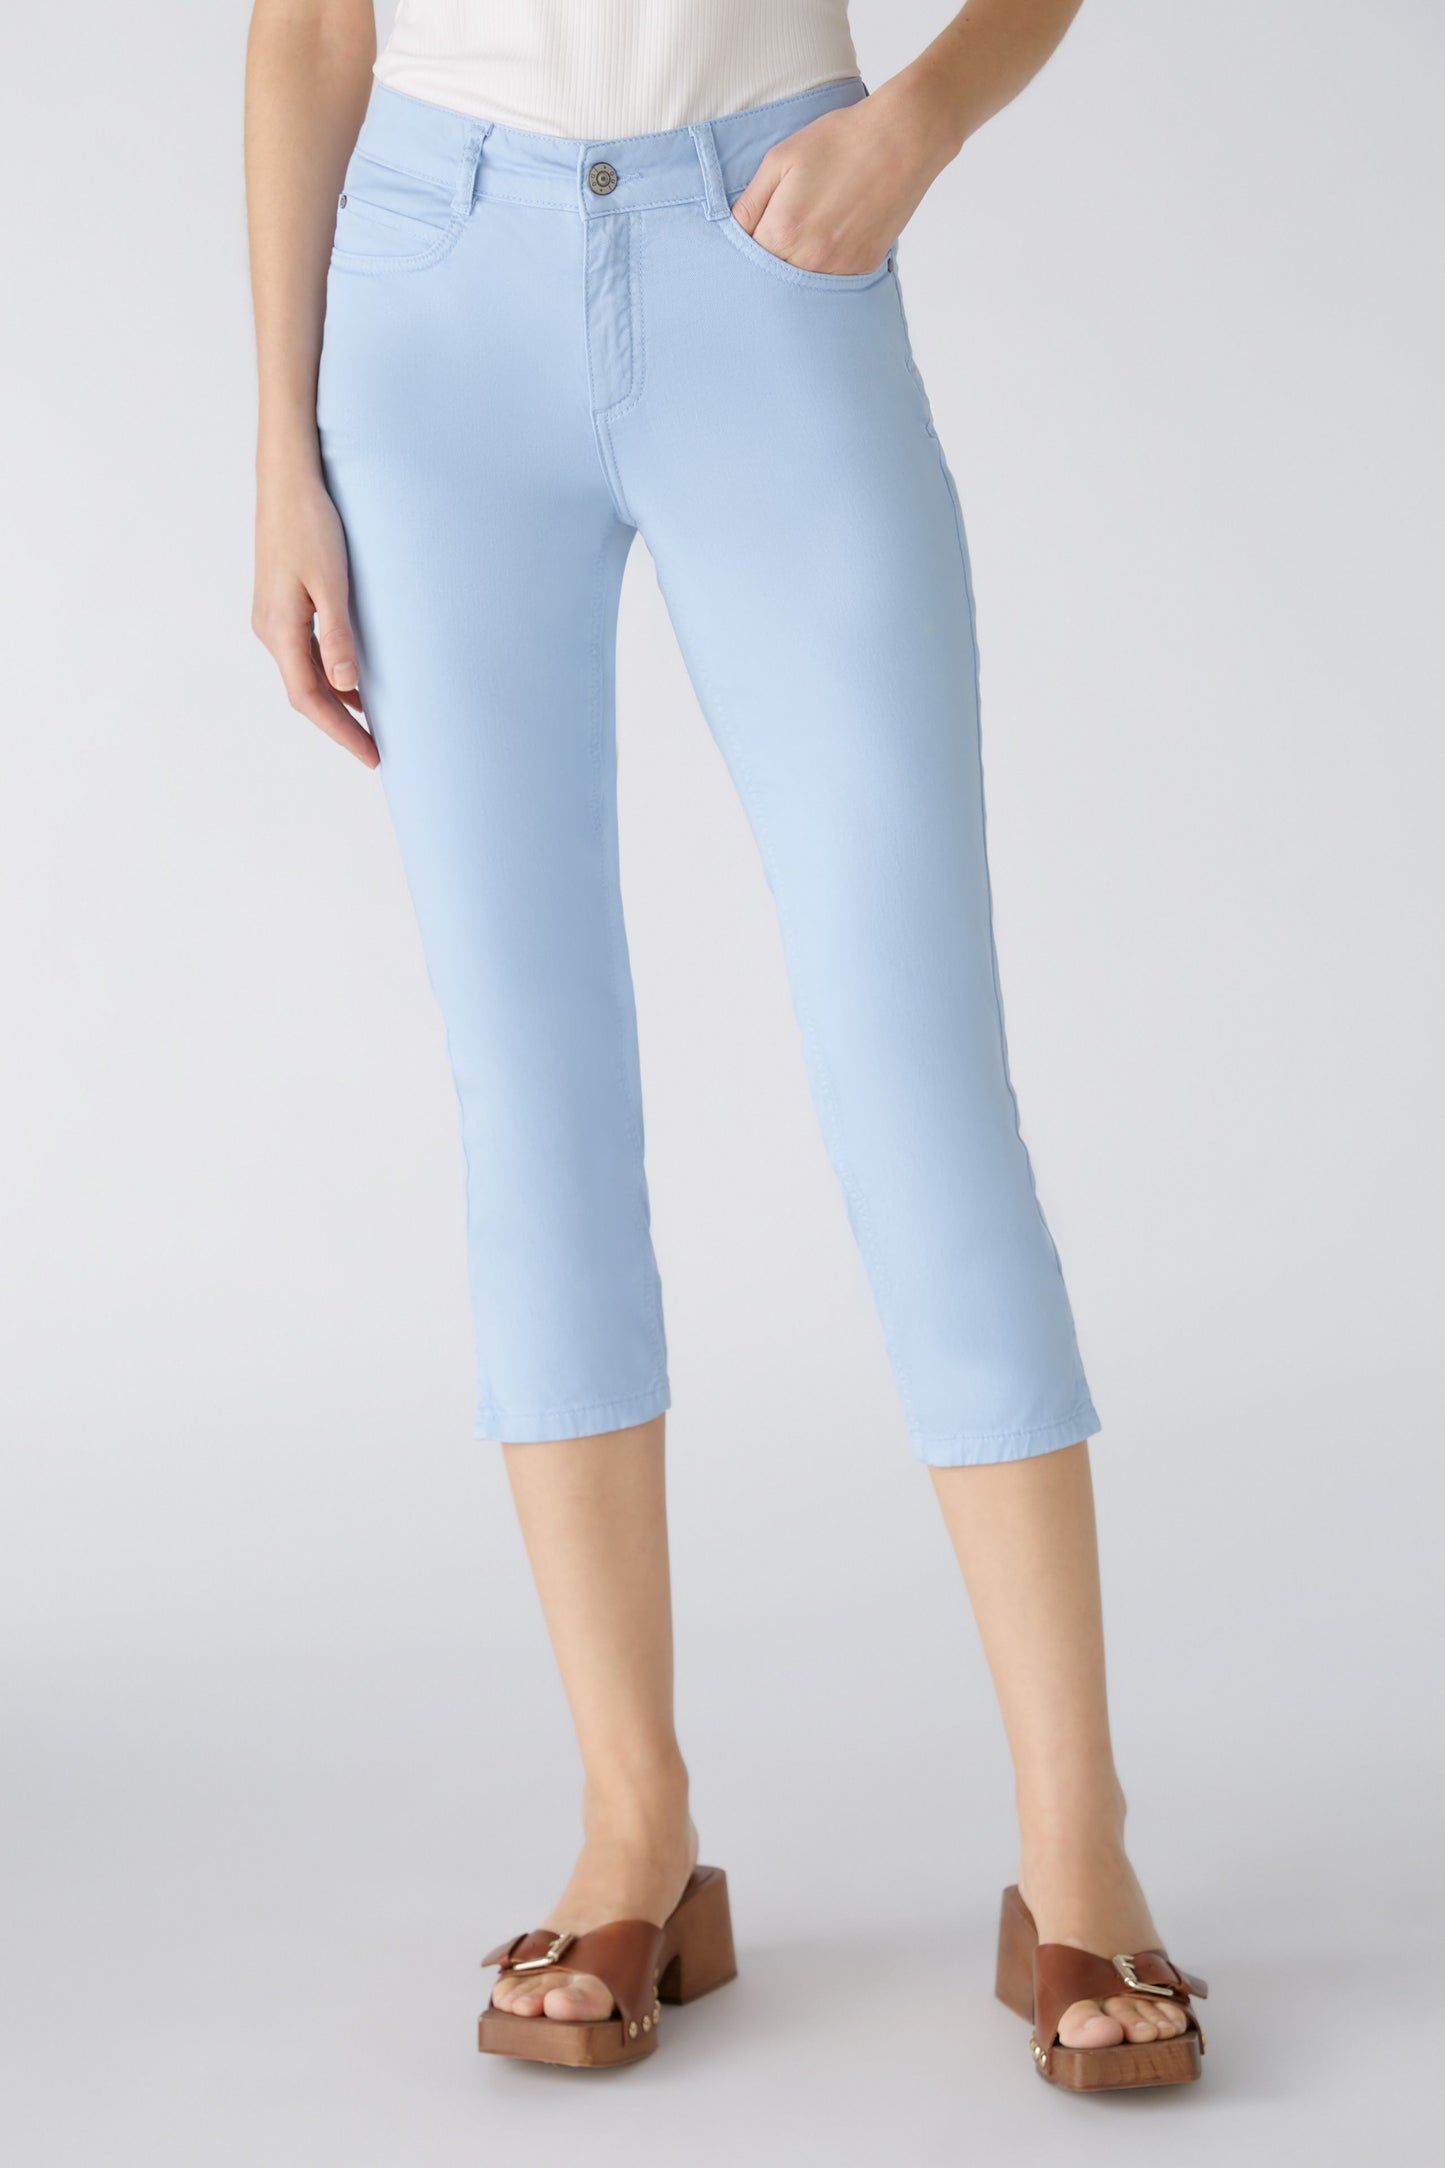 Oui 78878 Pale Blue Cropped Jeans